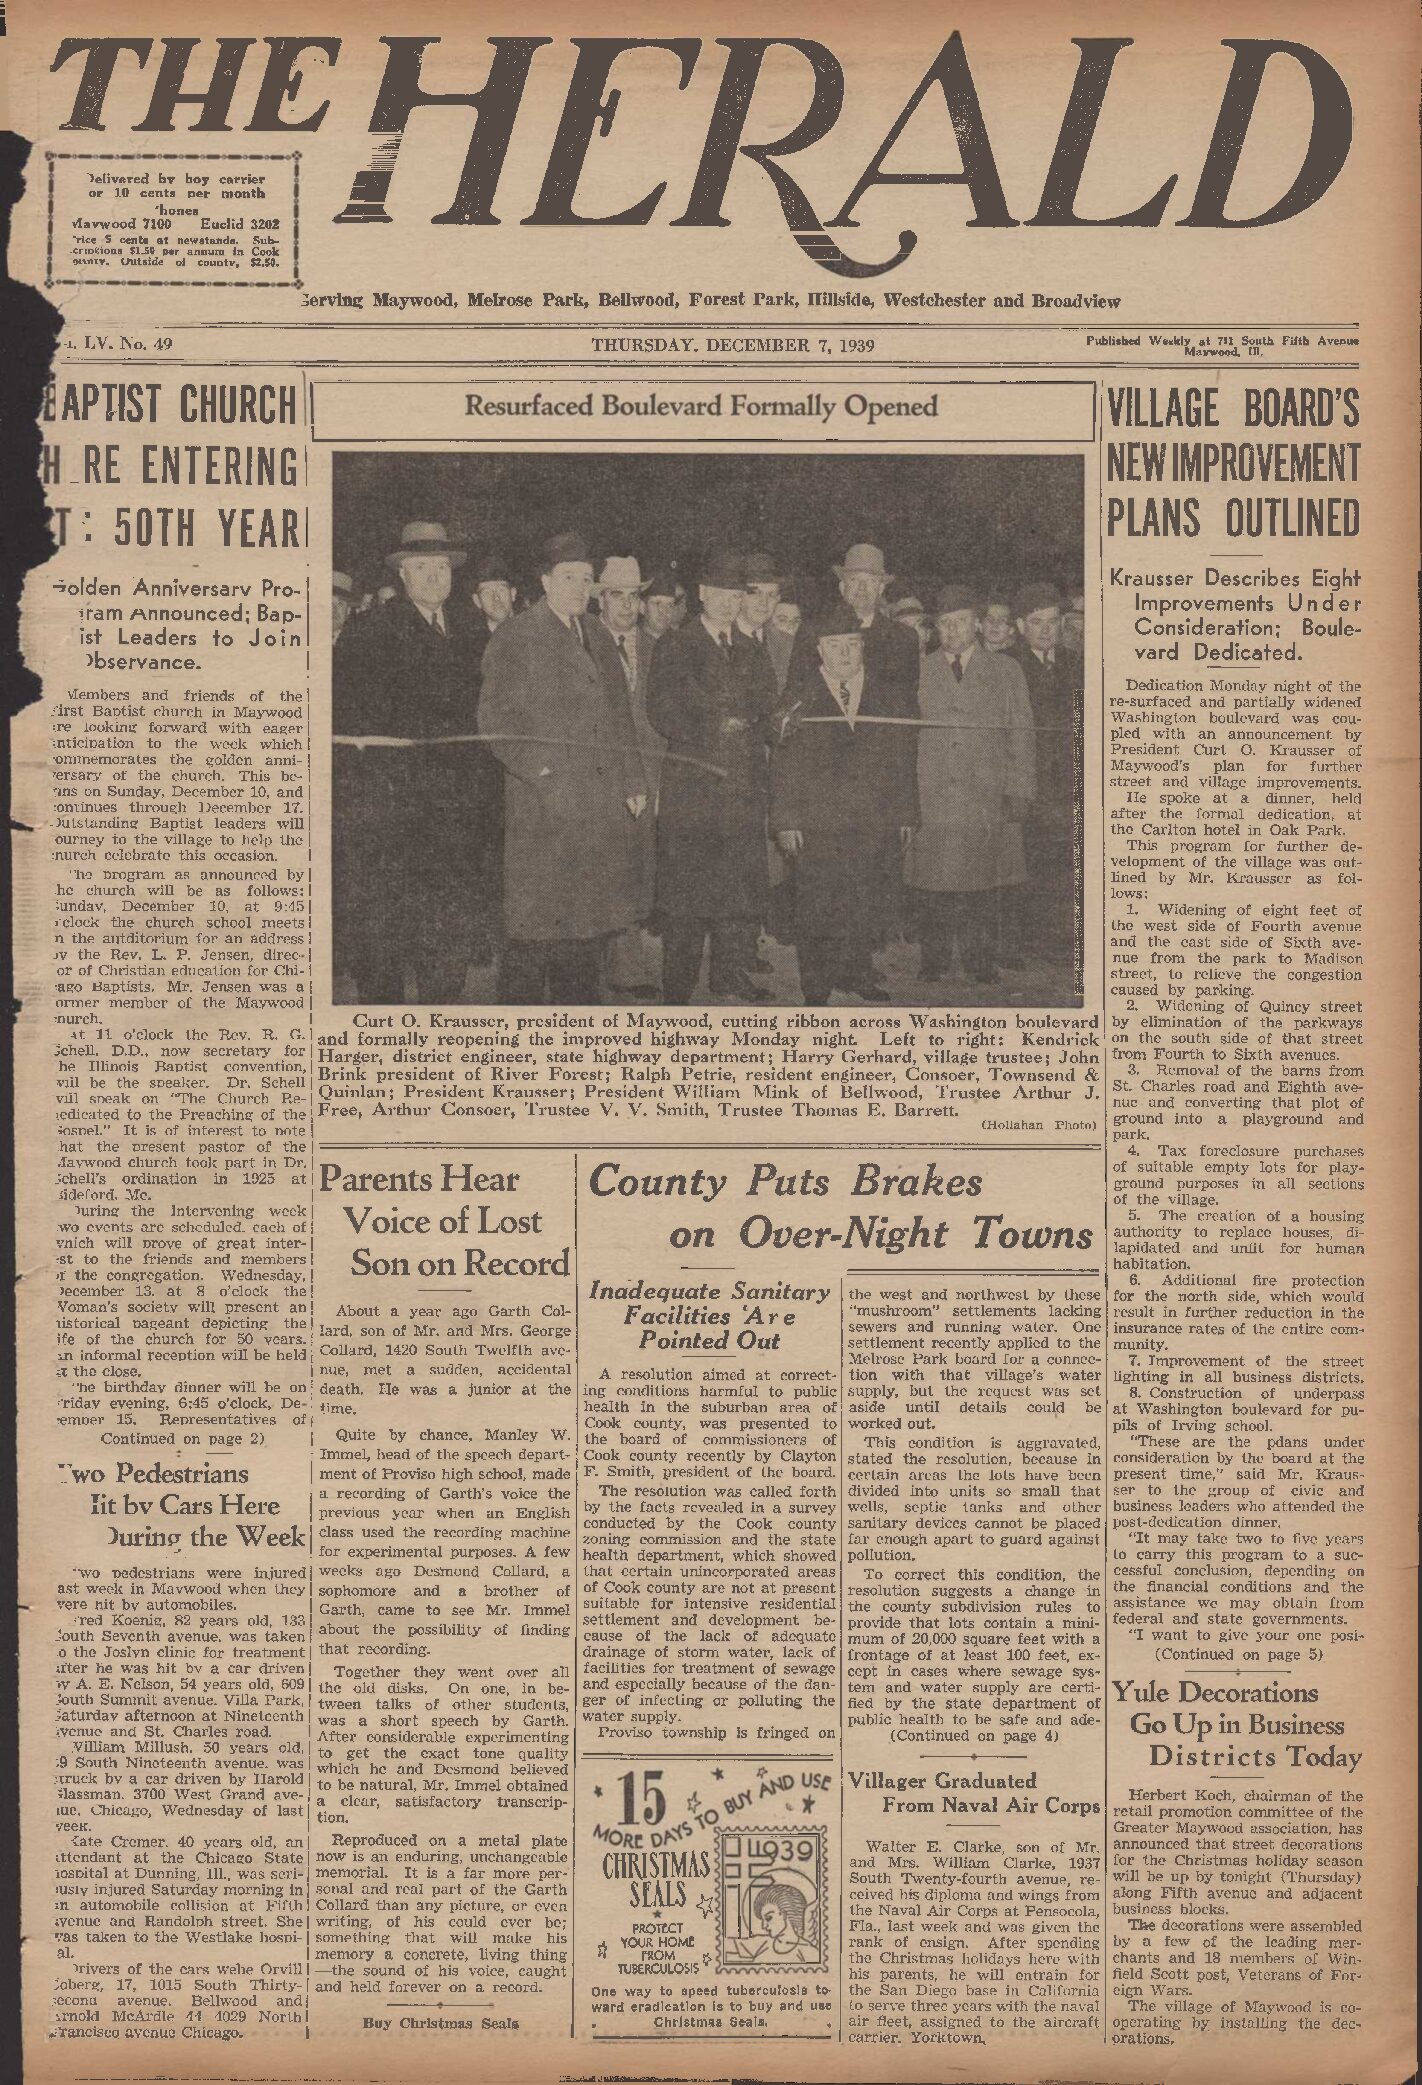 The Herald – 19391207